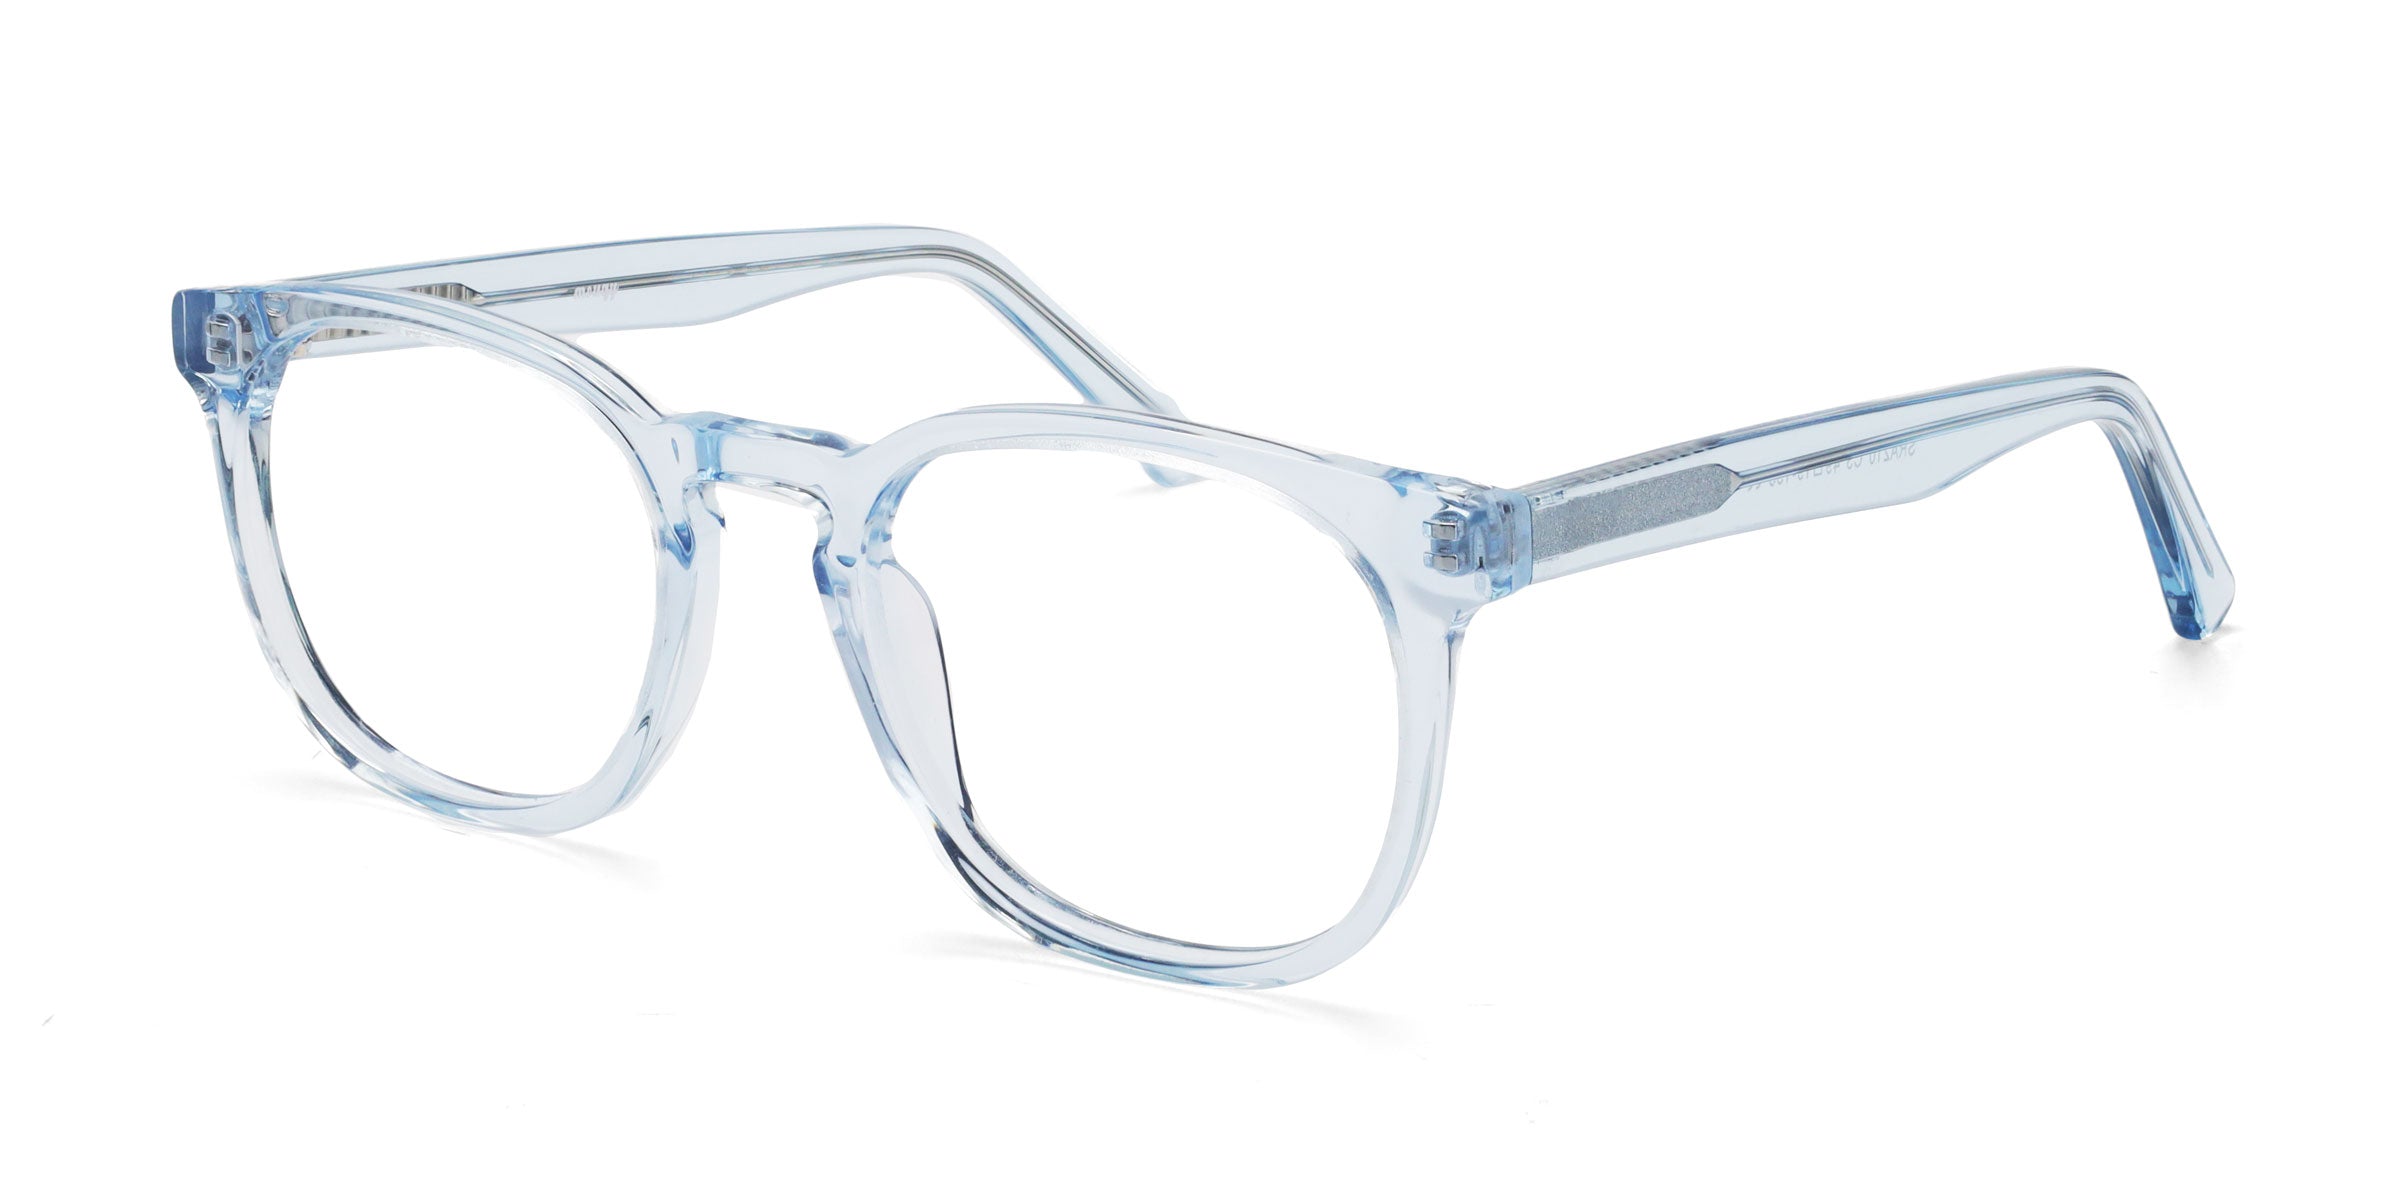 peace square blue eyeglasses frames angled view